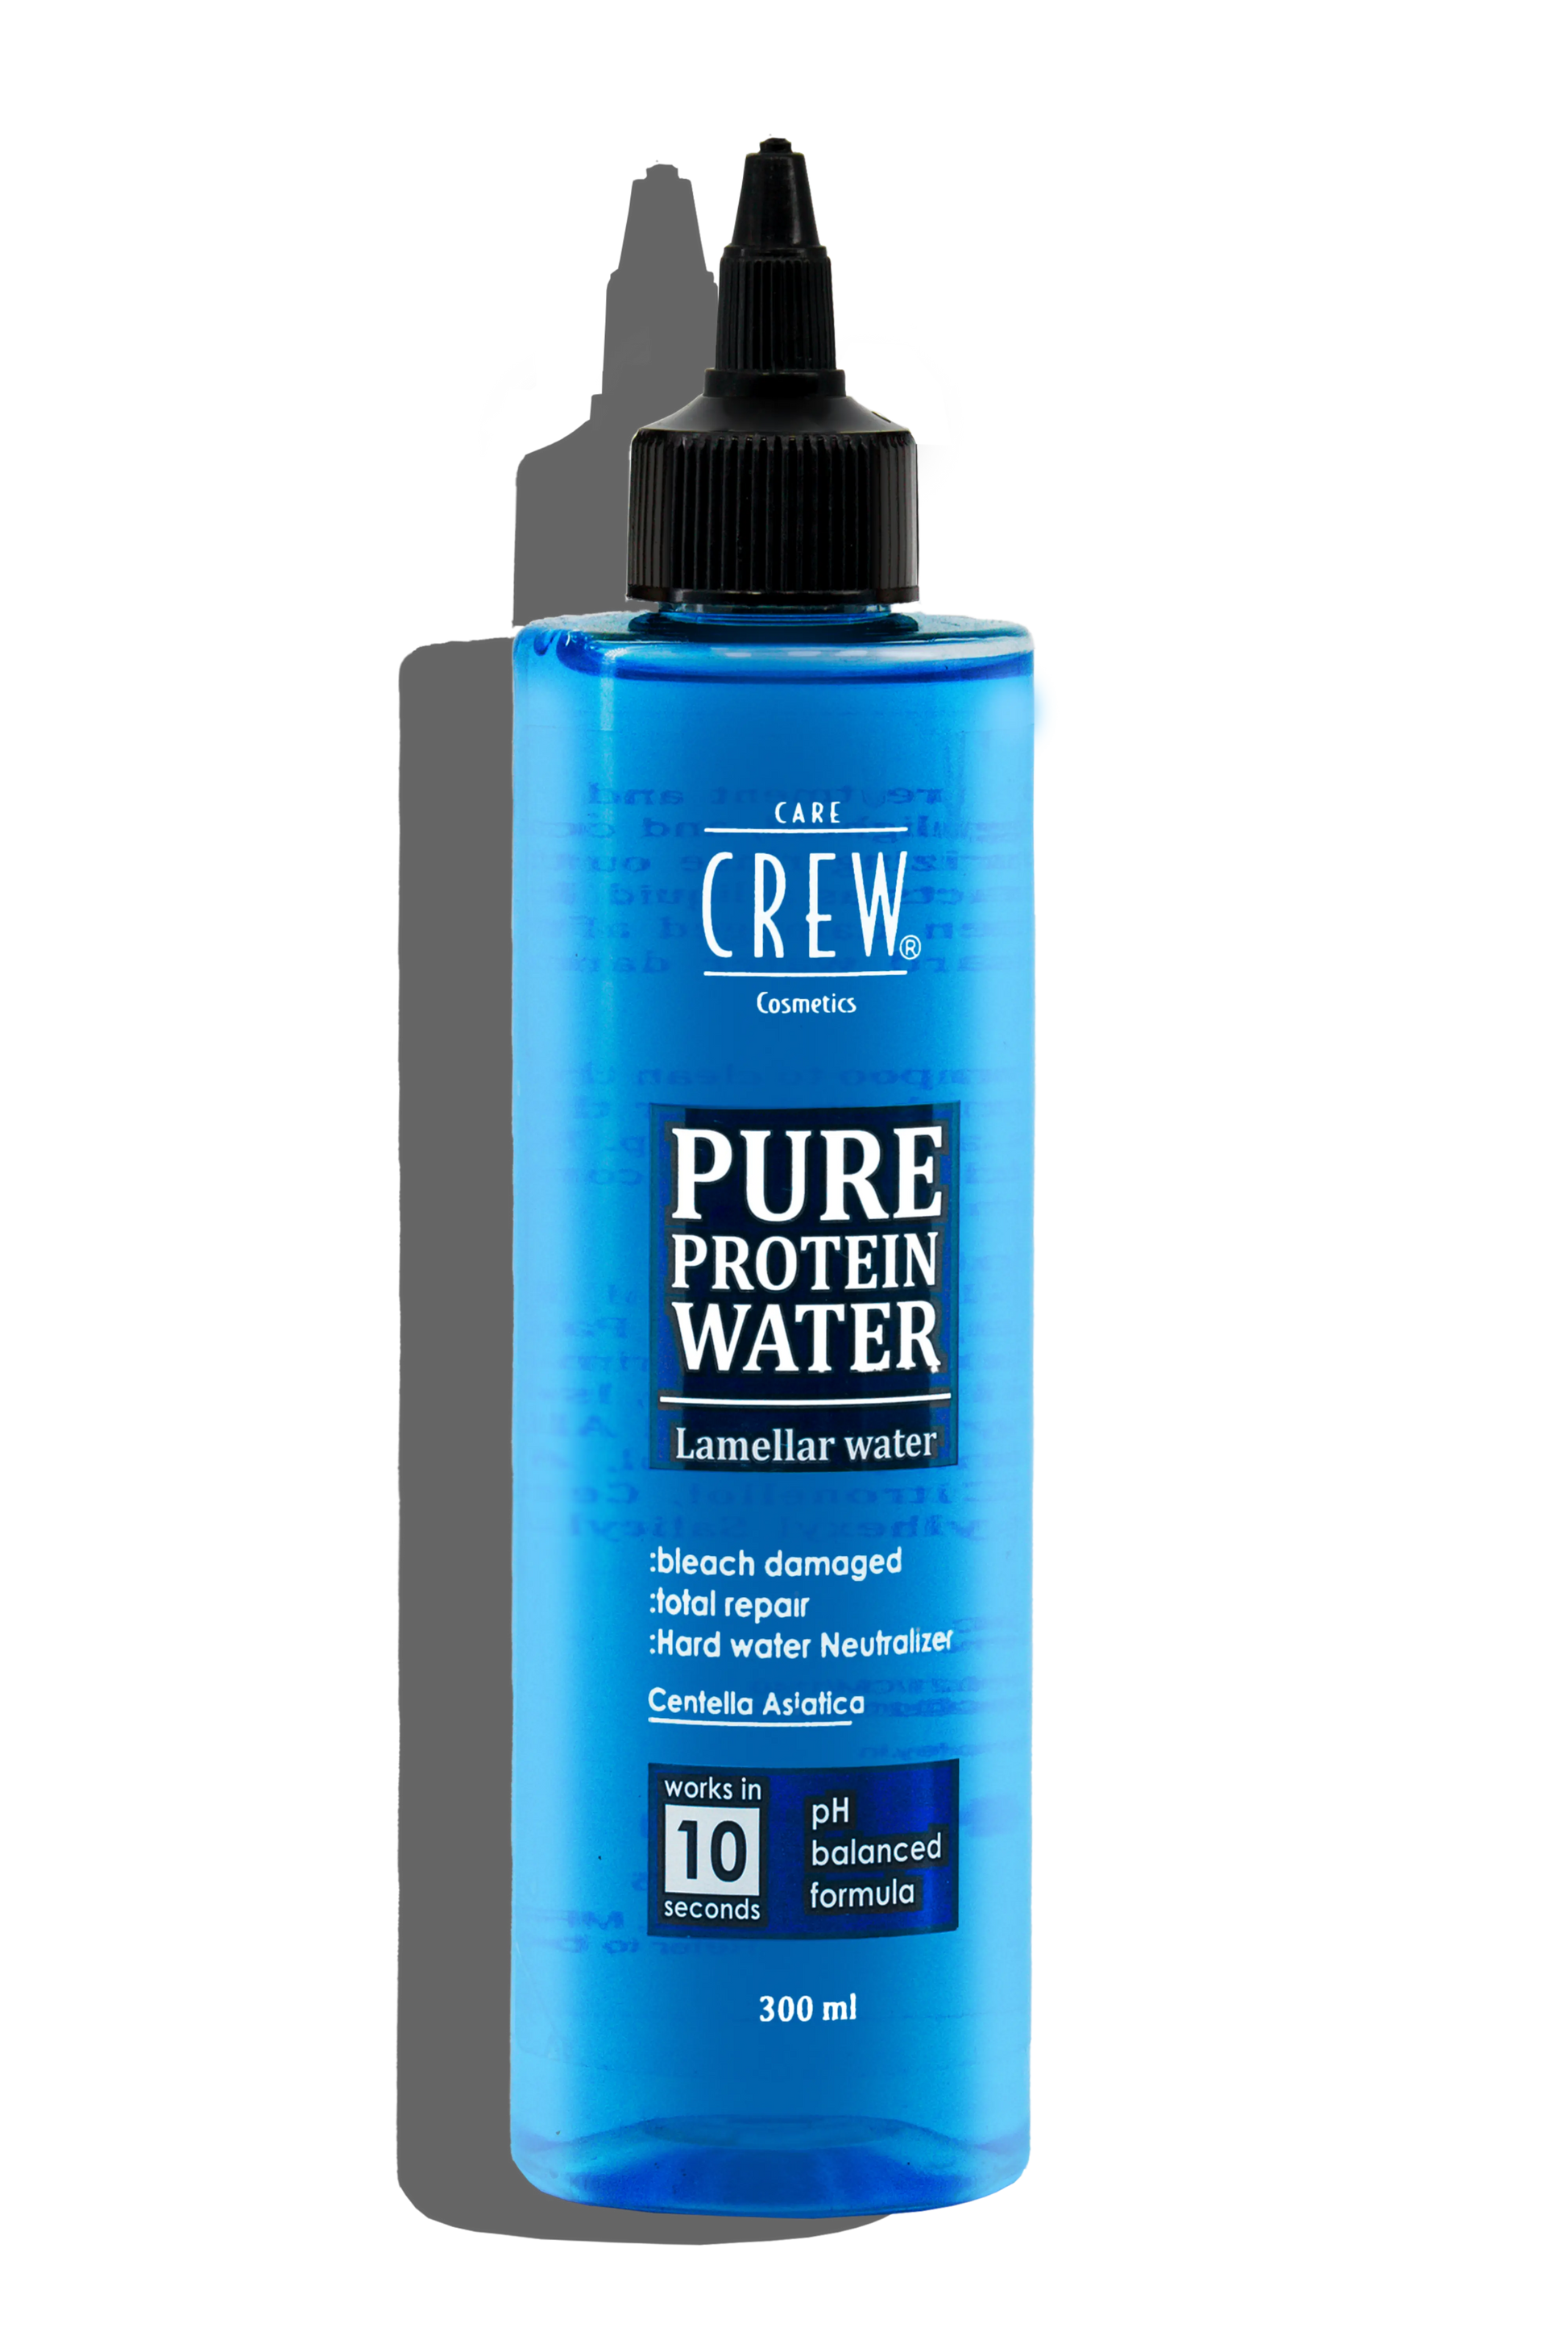 CareCrew Pure Protein Water (Lamellar Water Treatment) Bond Repair Treatment 